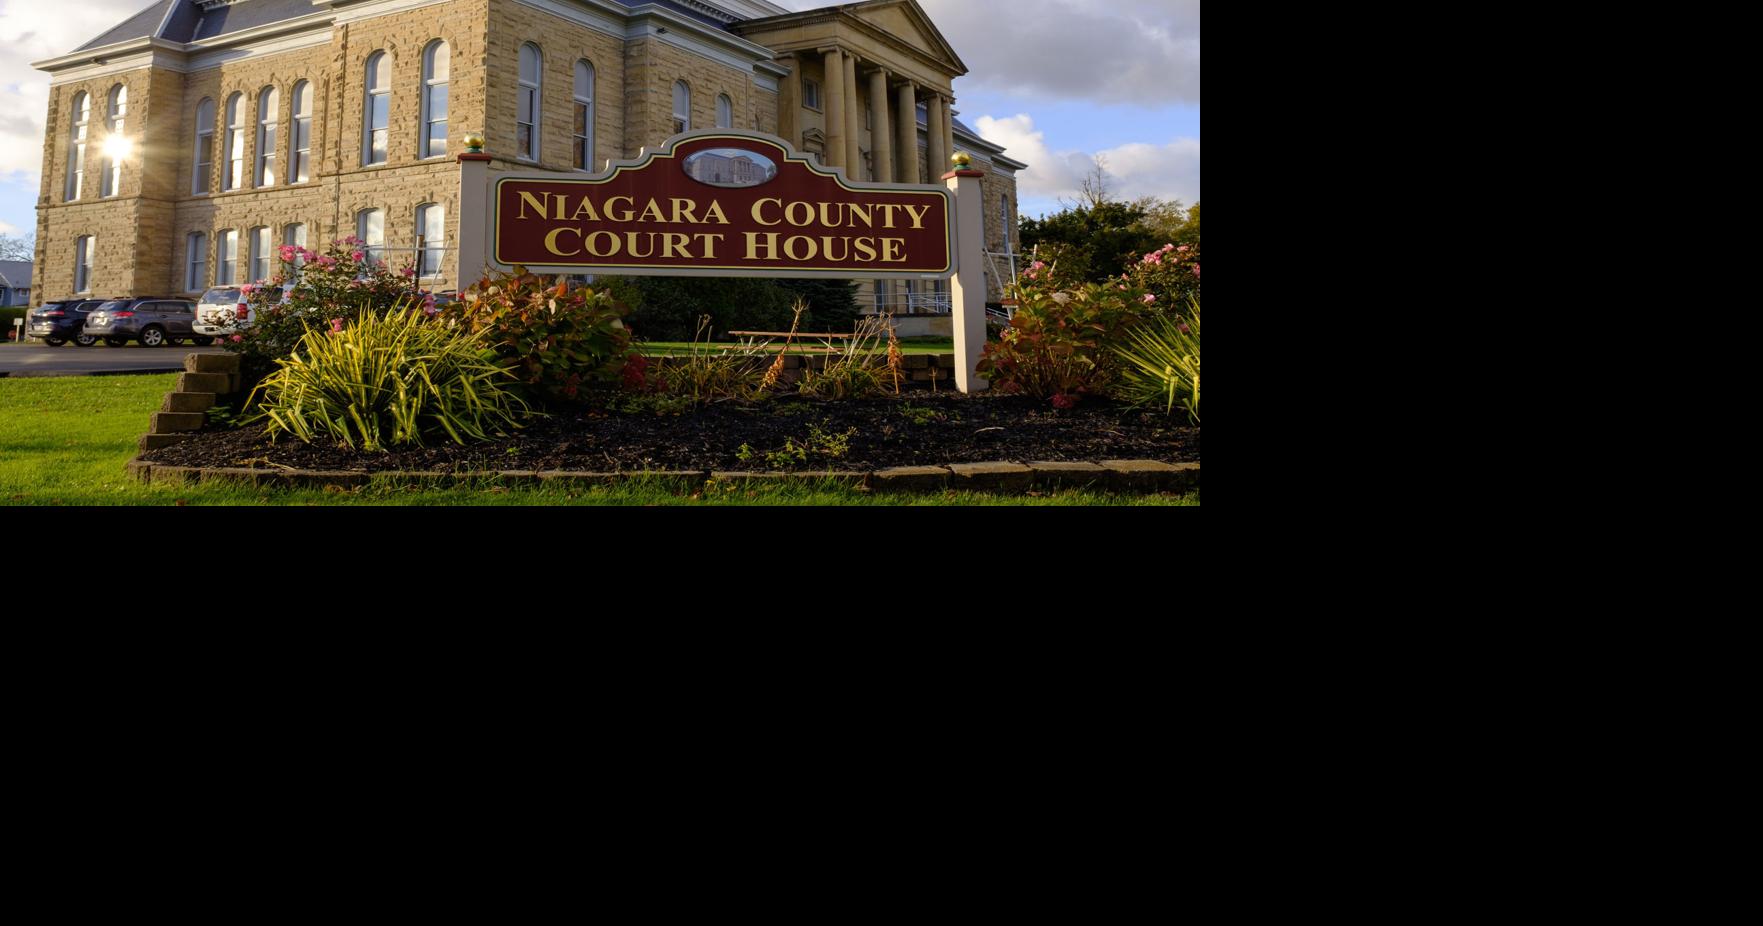 Reception to open slavery case exhibit at Niagara County Courthouse